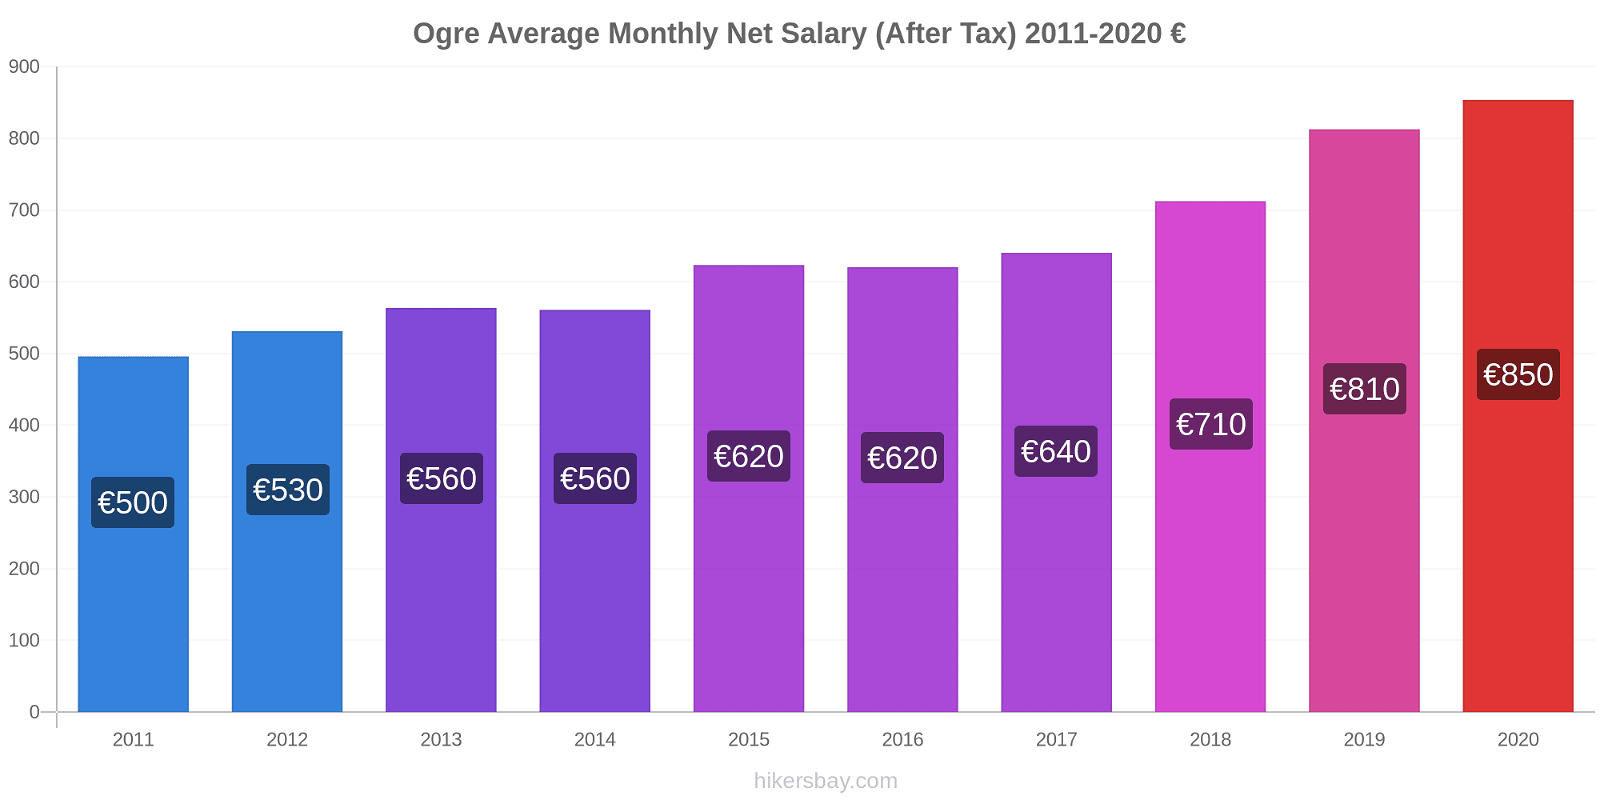 Ogre price changes Average Monthly Net Salary (After Tax) hikersbay.com